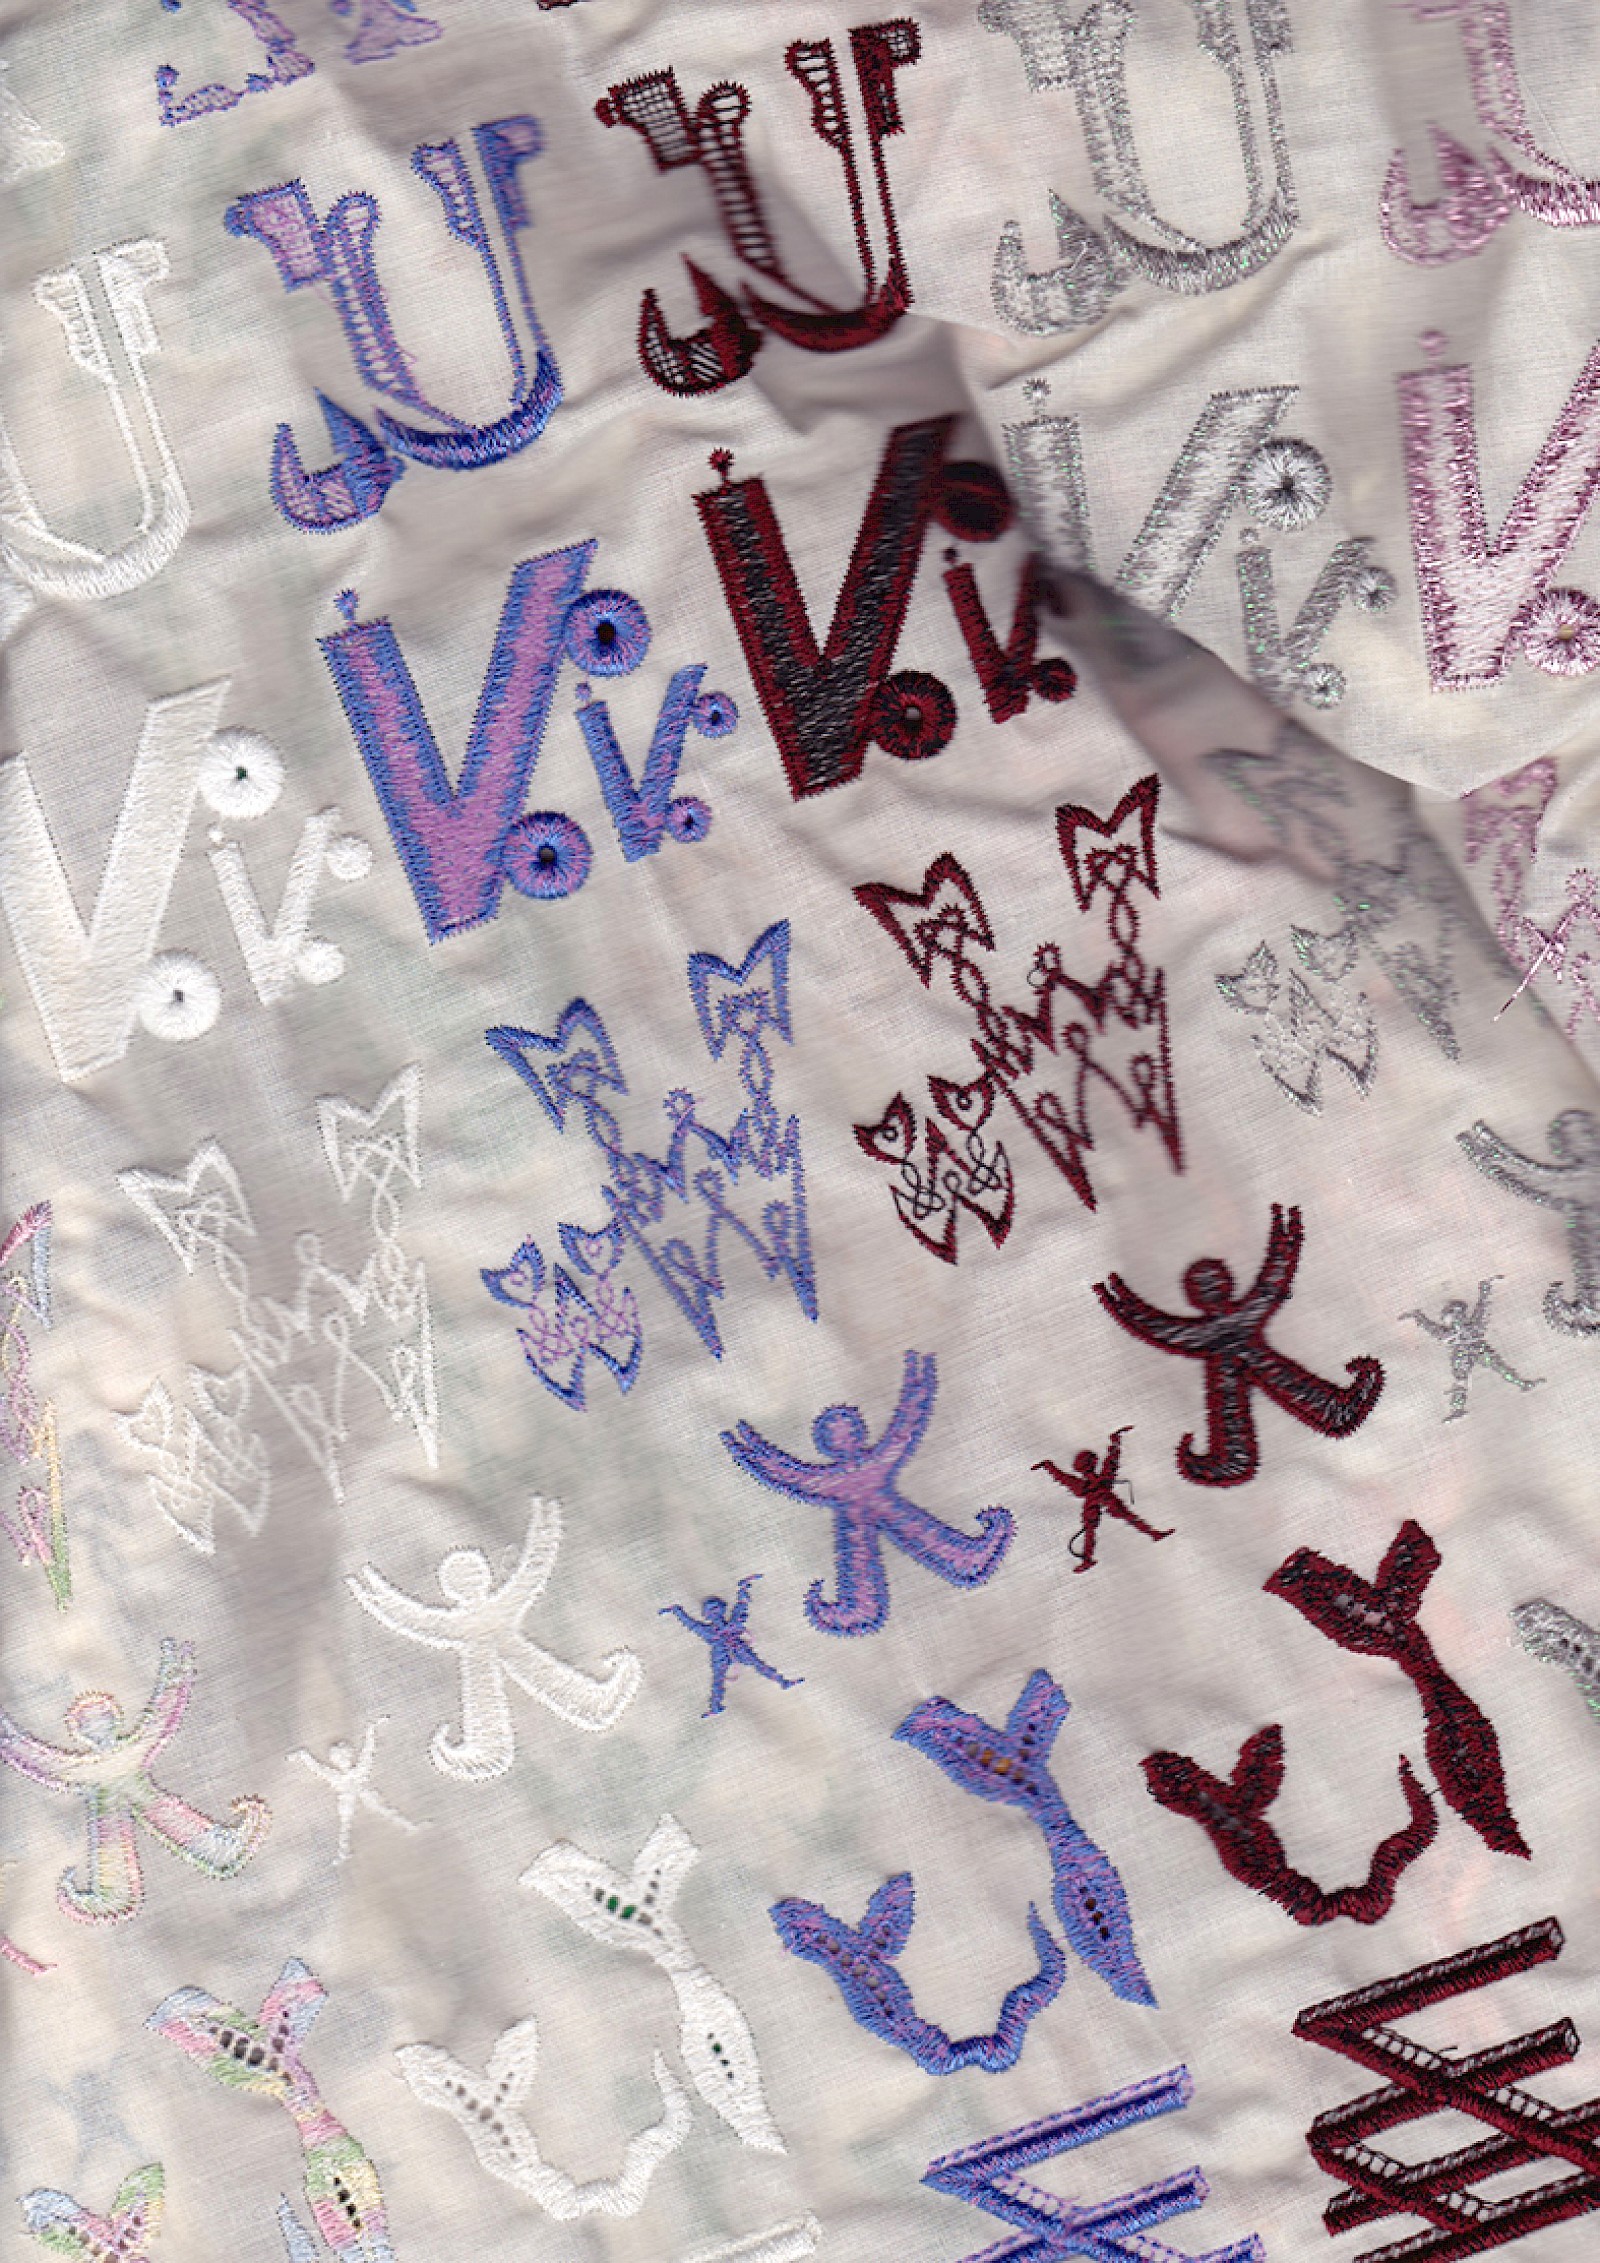 Louis Vuitton handwritten logo machine embroidery files download